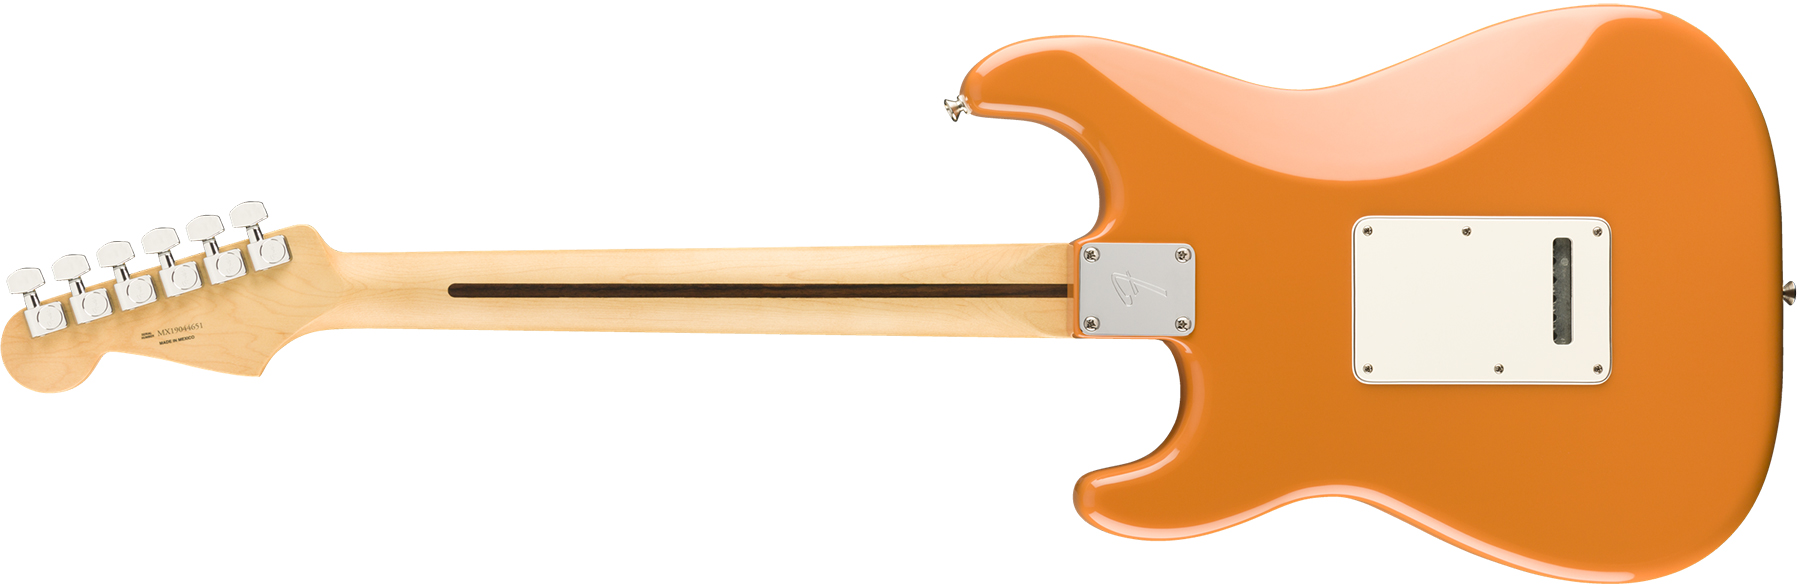 Fender Strat Player Lh Gaucher Mex Sss Mn - Capri Orange - Guitare Électrique Forme Str - Variation 1